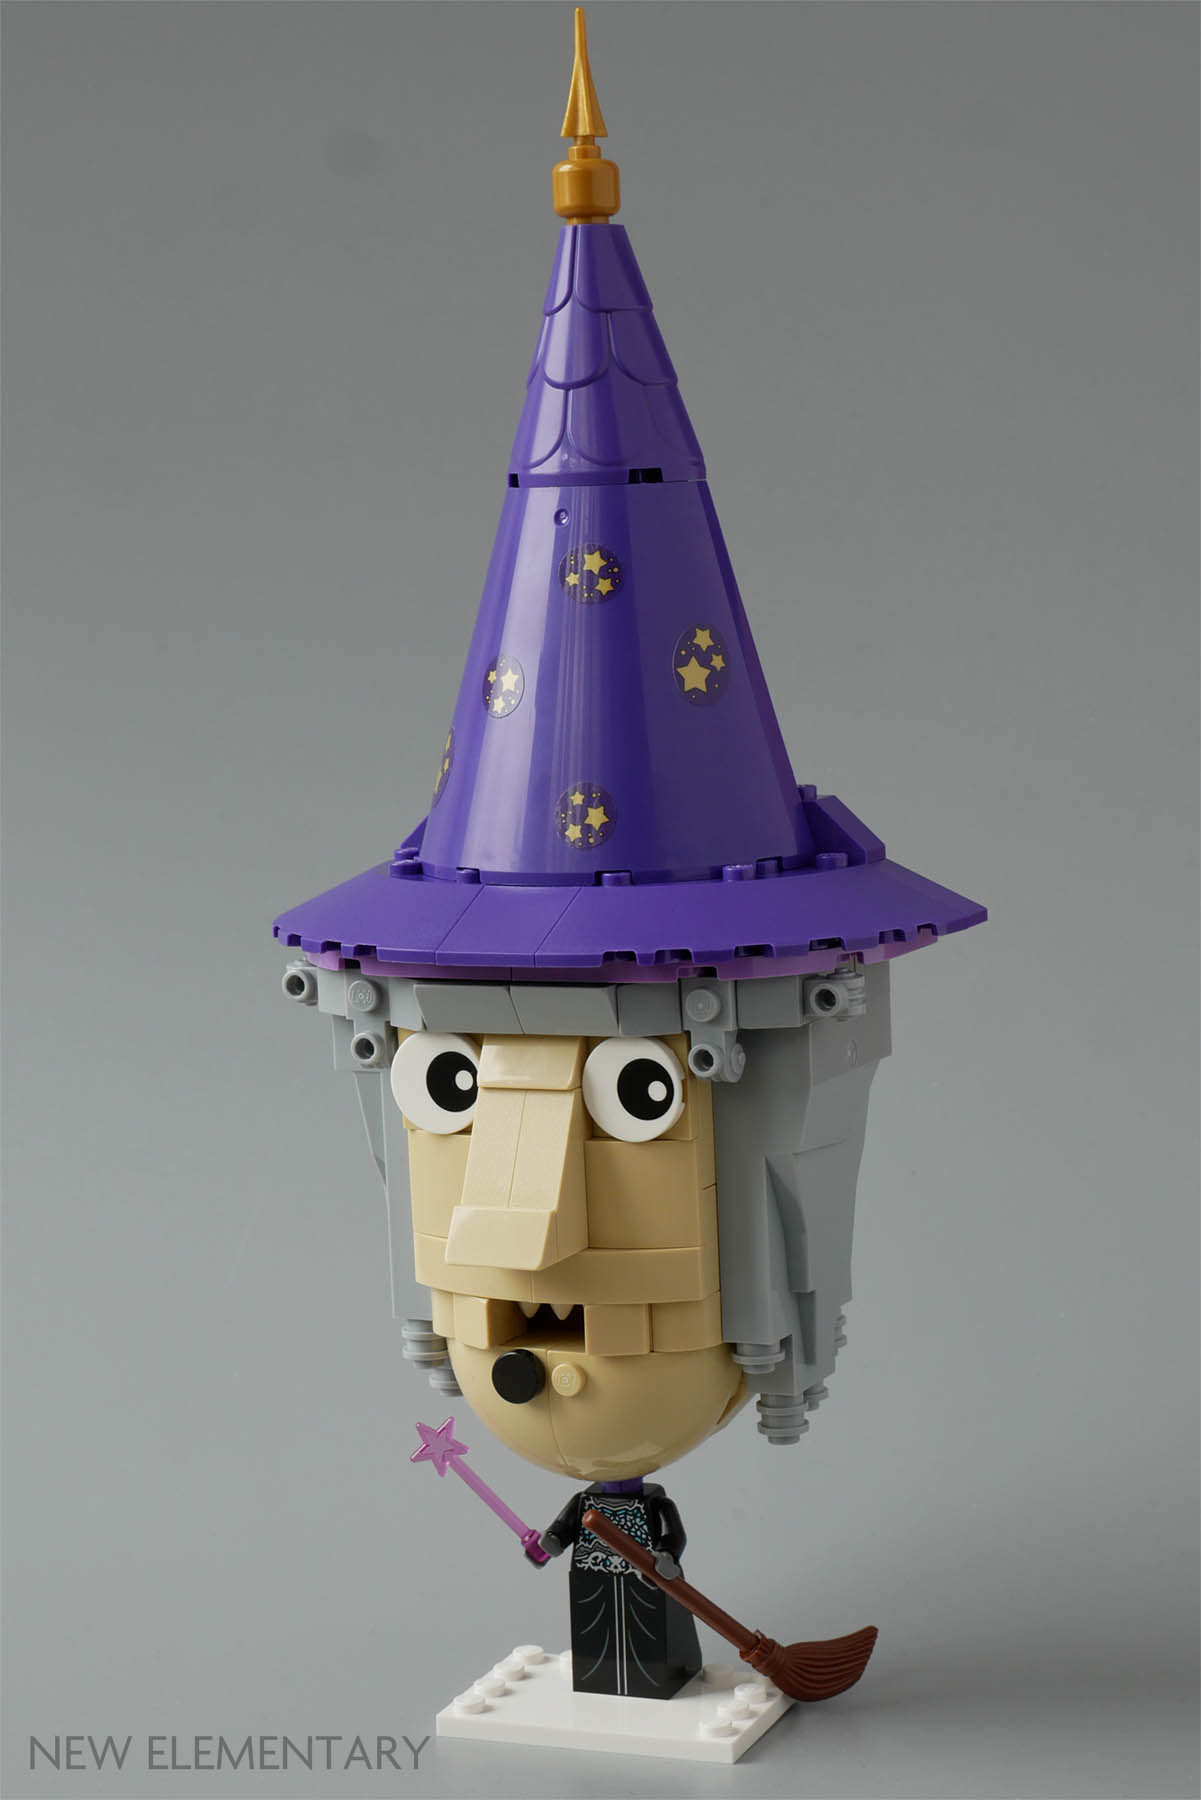 LEGO 43187 Rapunzel's Tower - LEGO Disney Princess - BricksDirect